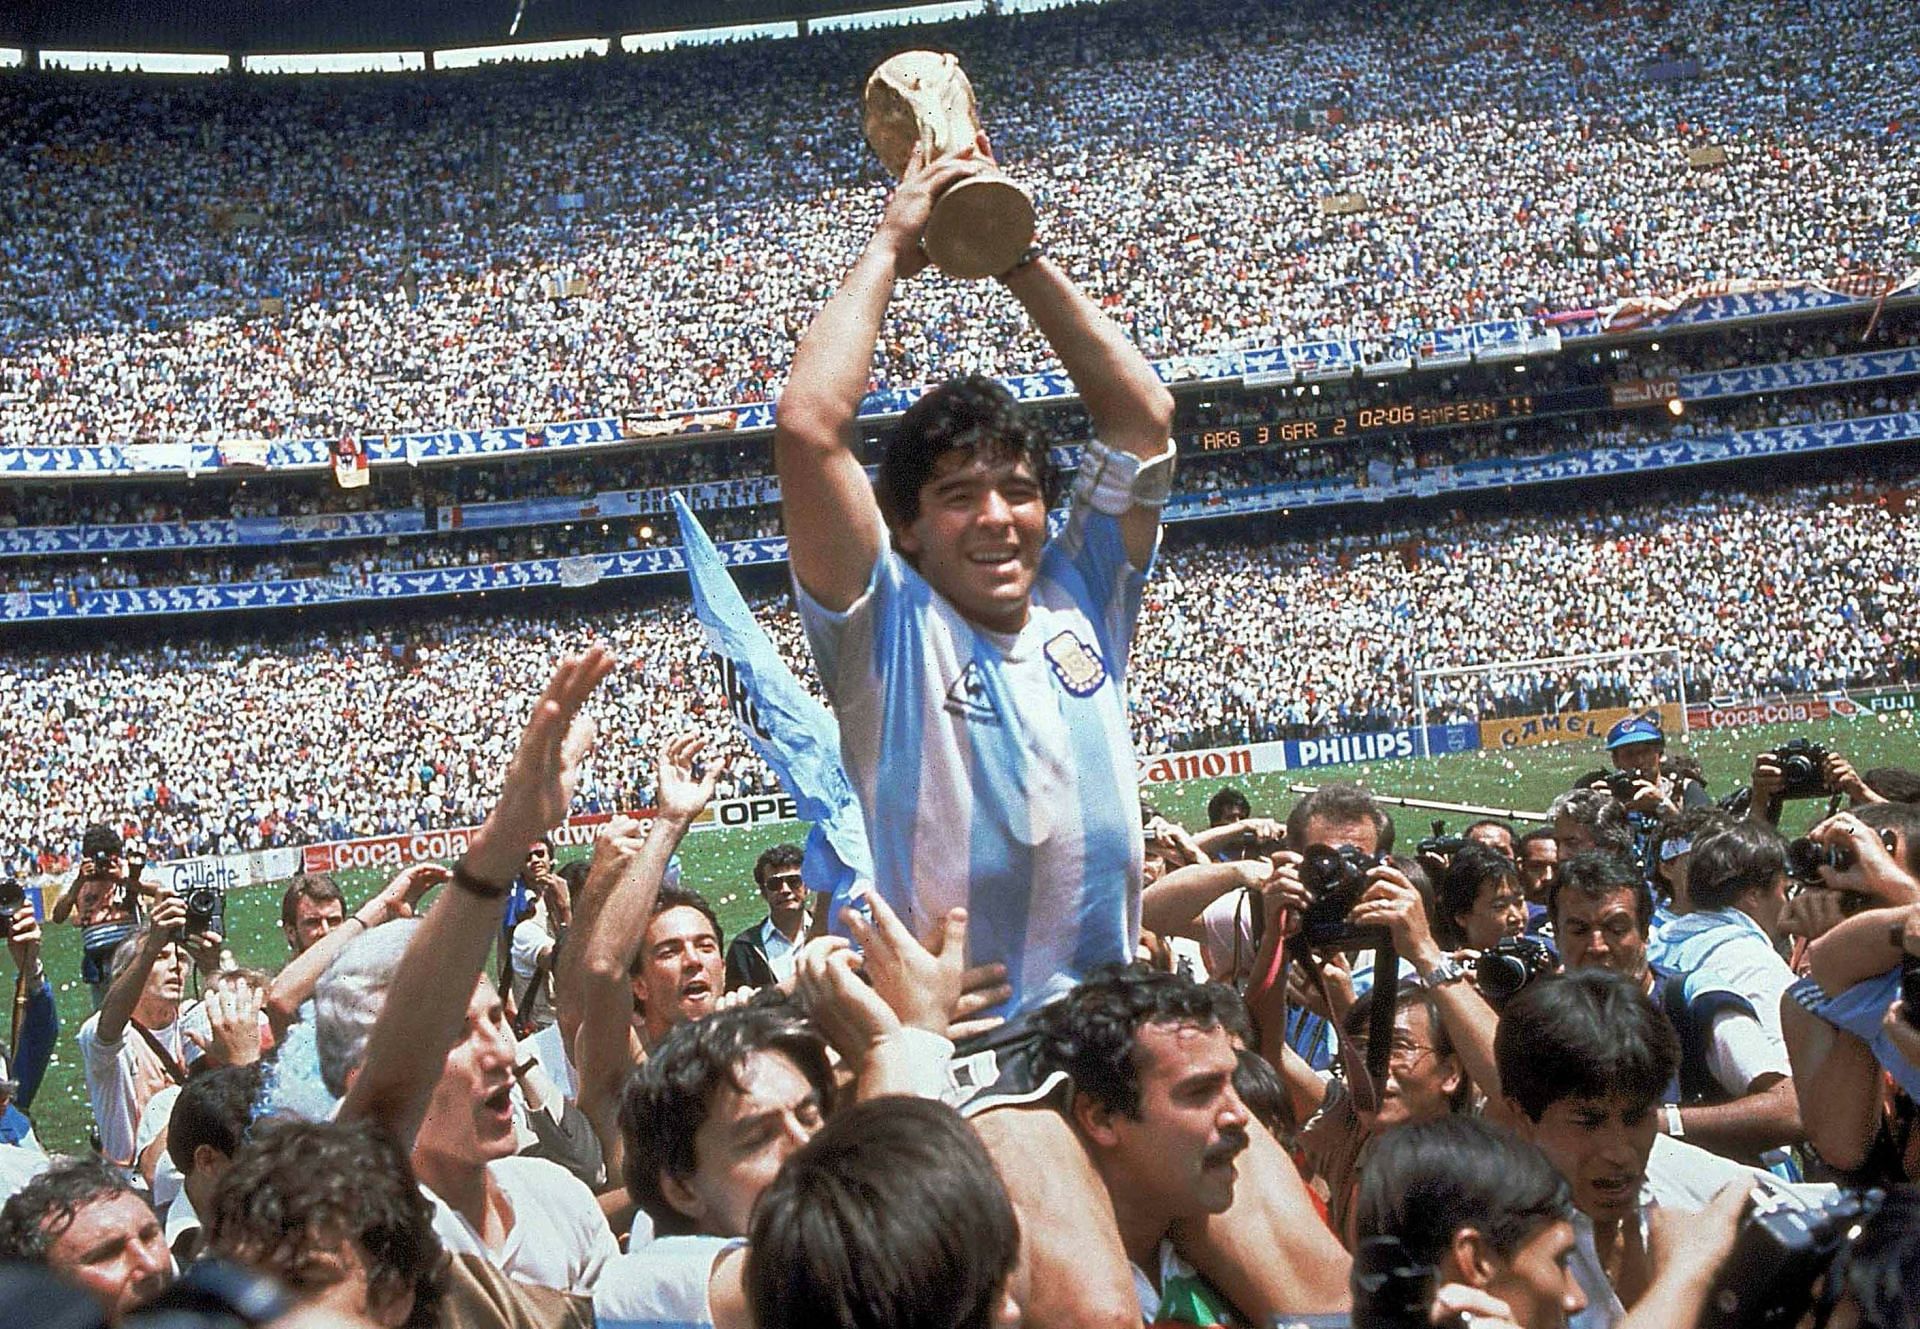 Maradona was Argentina's World Cup hero in 1986